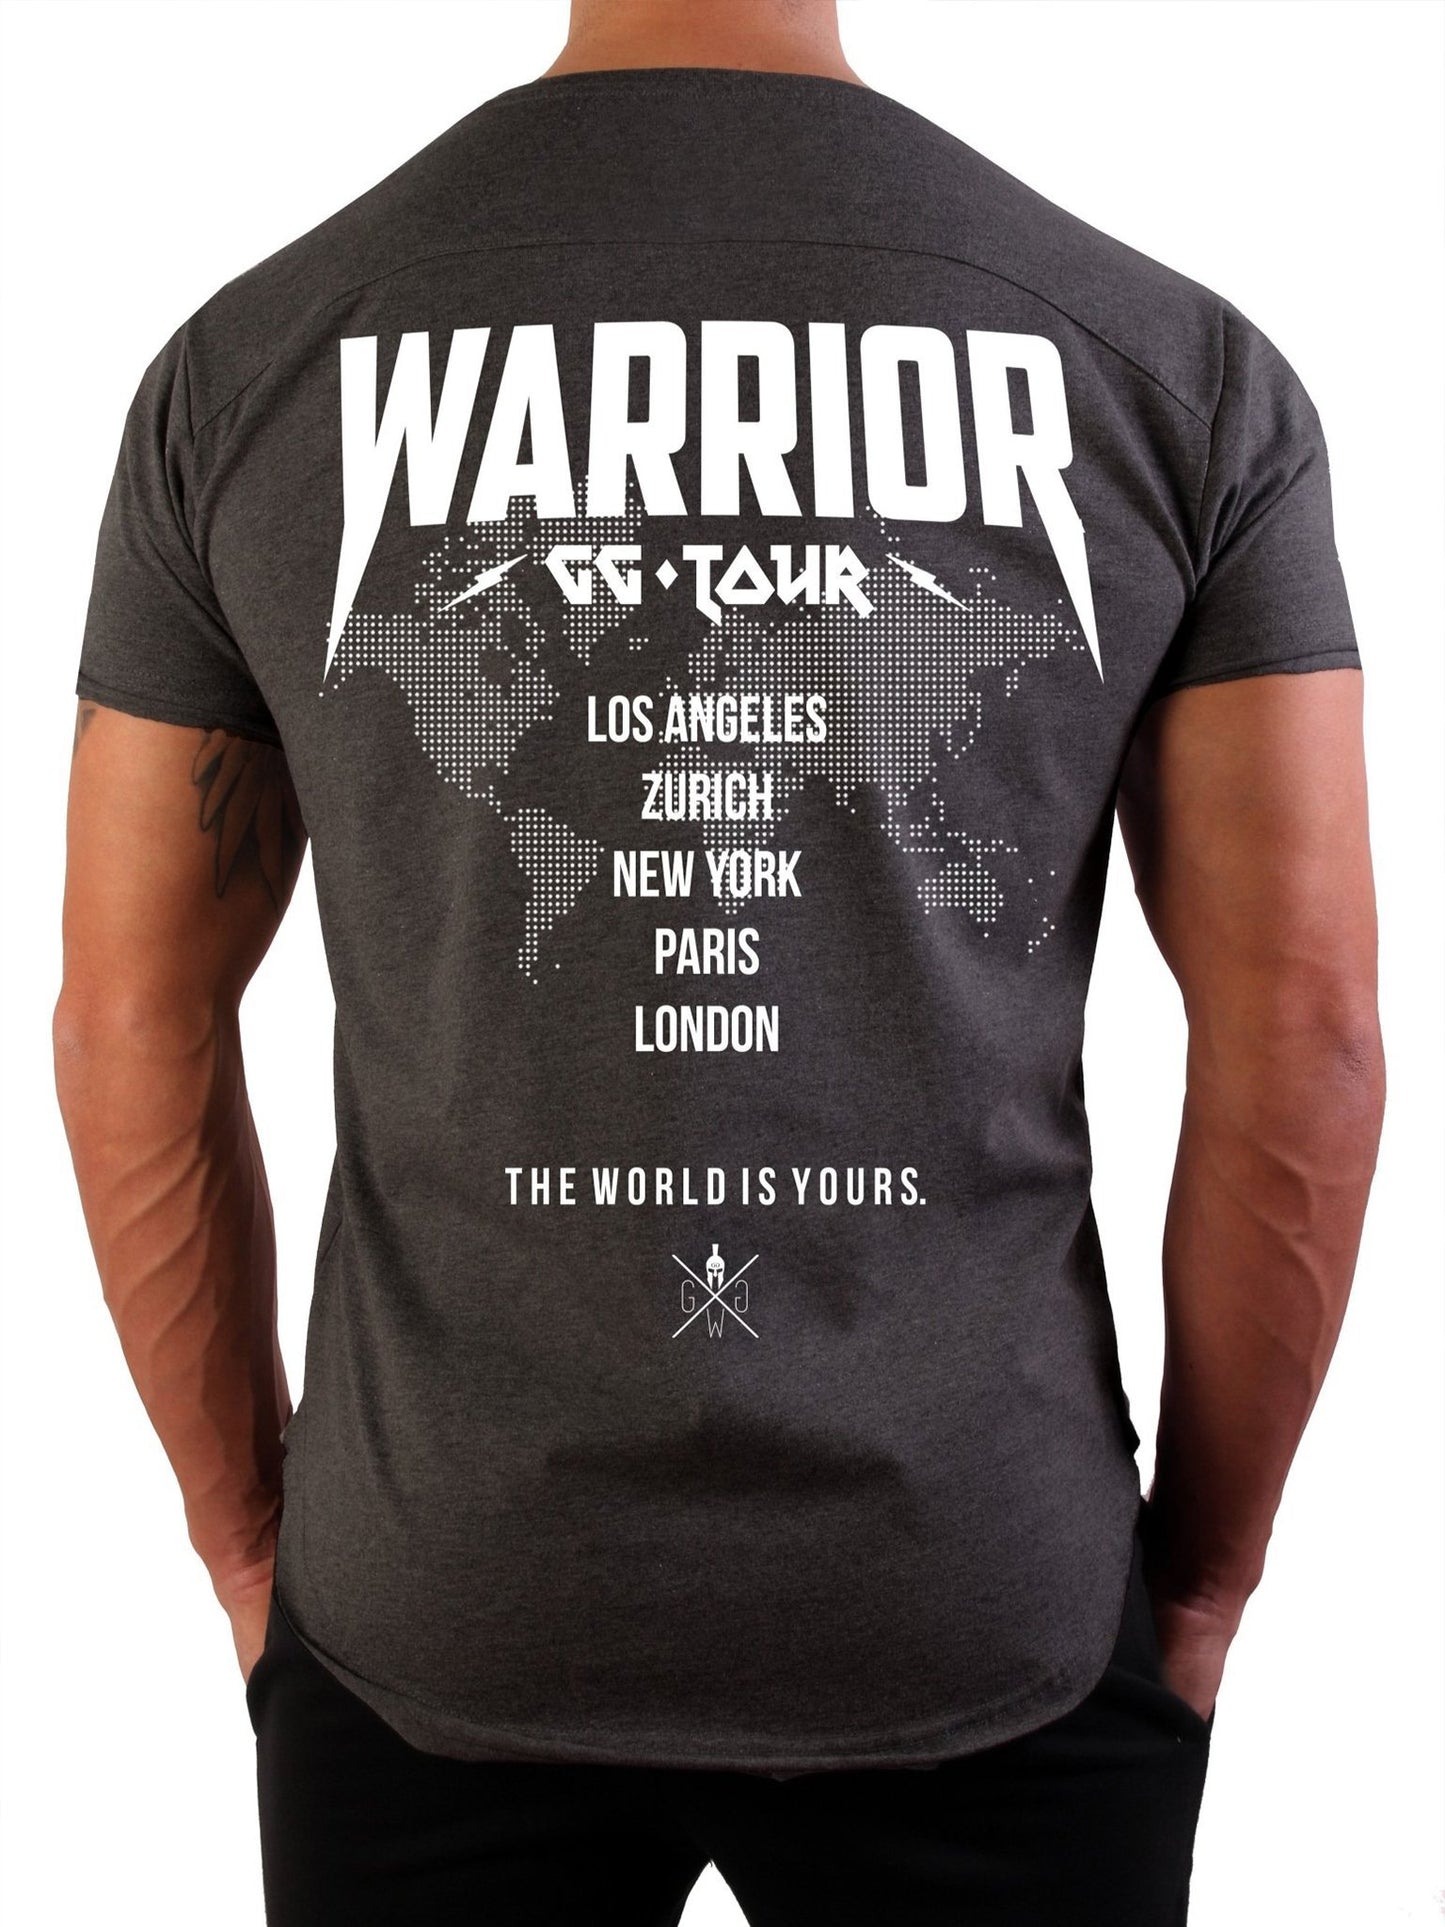 Warrior T-Shirt - World Tour - Gym Generation®--www.gymgeneration.ch